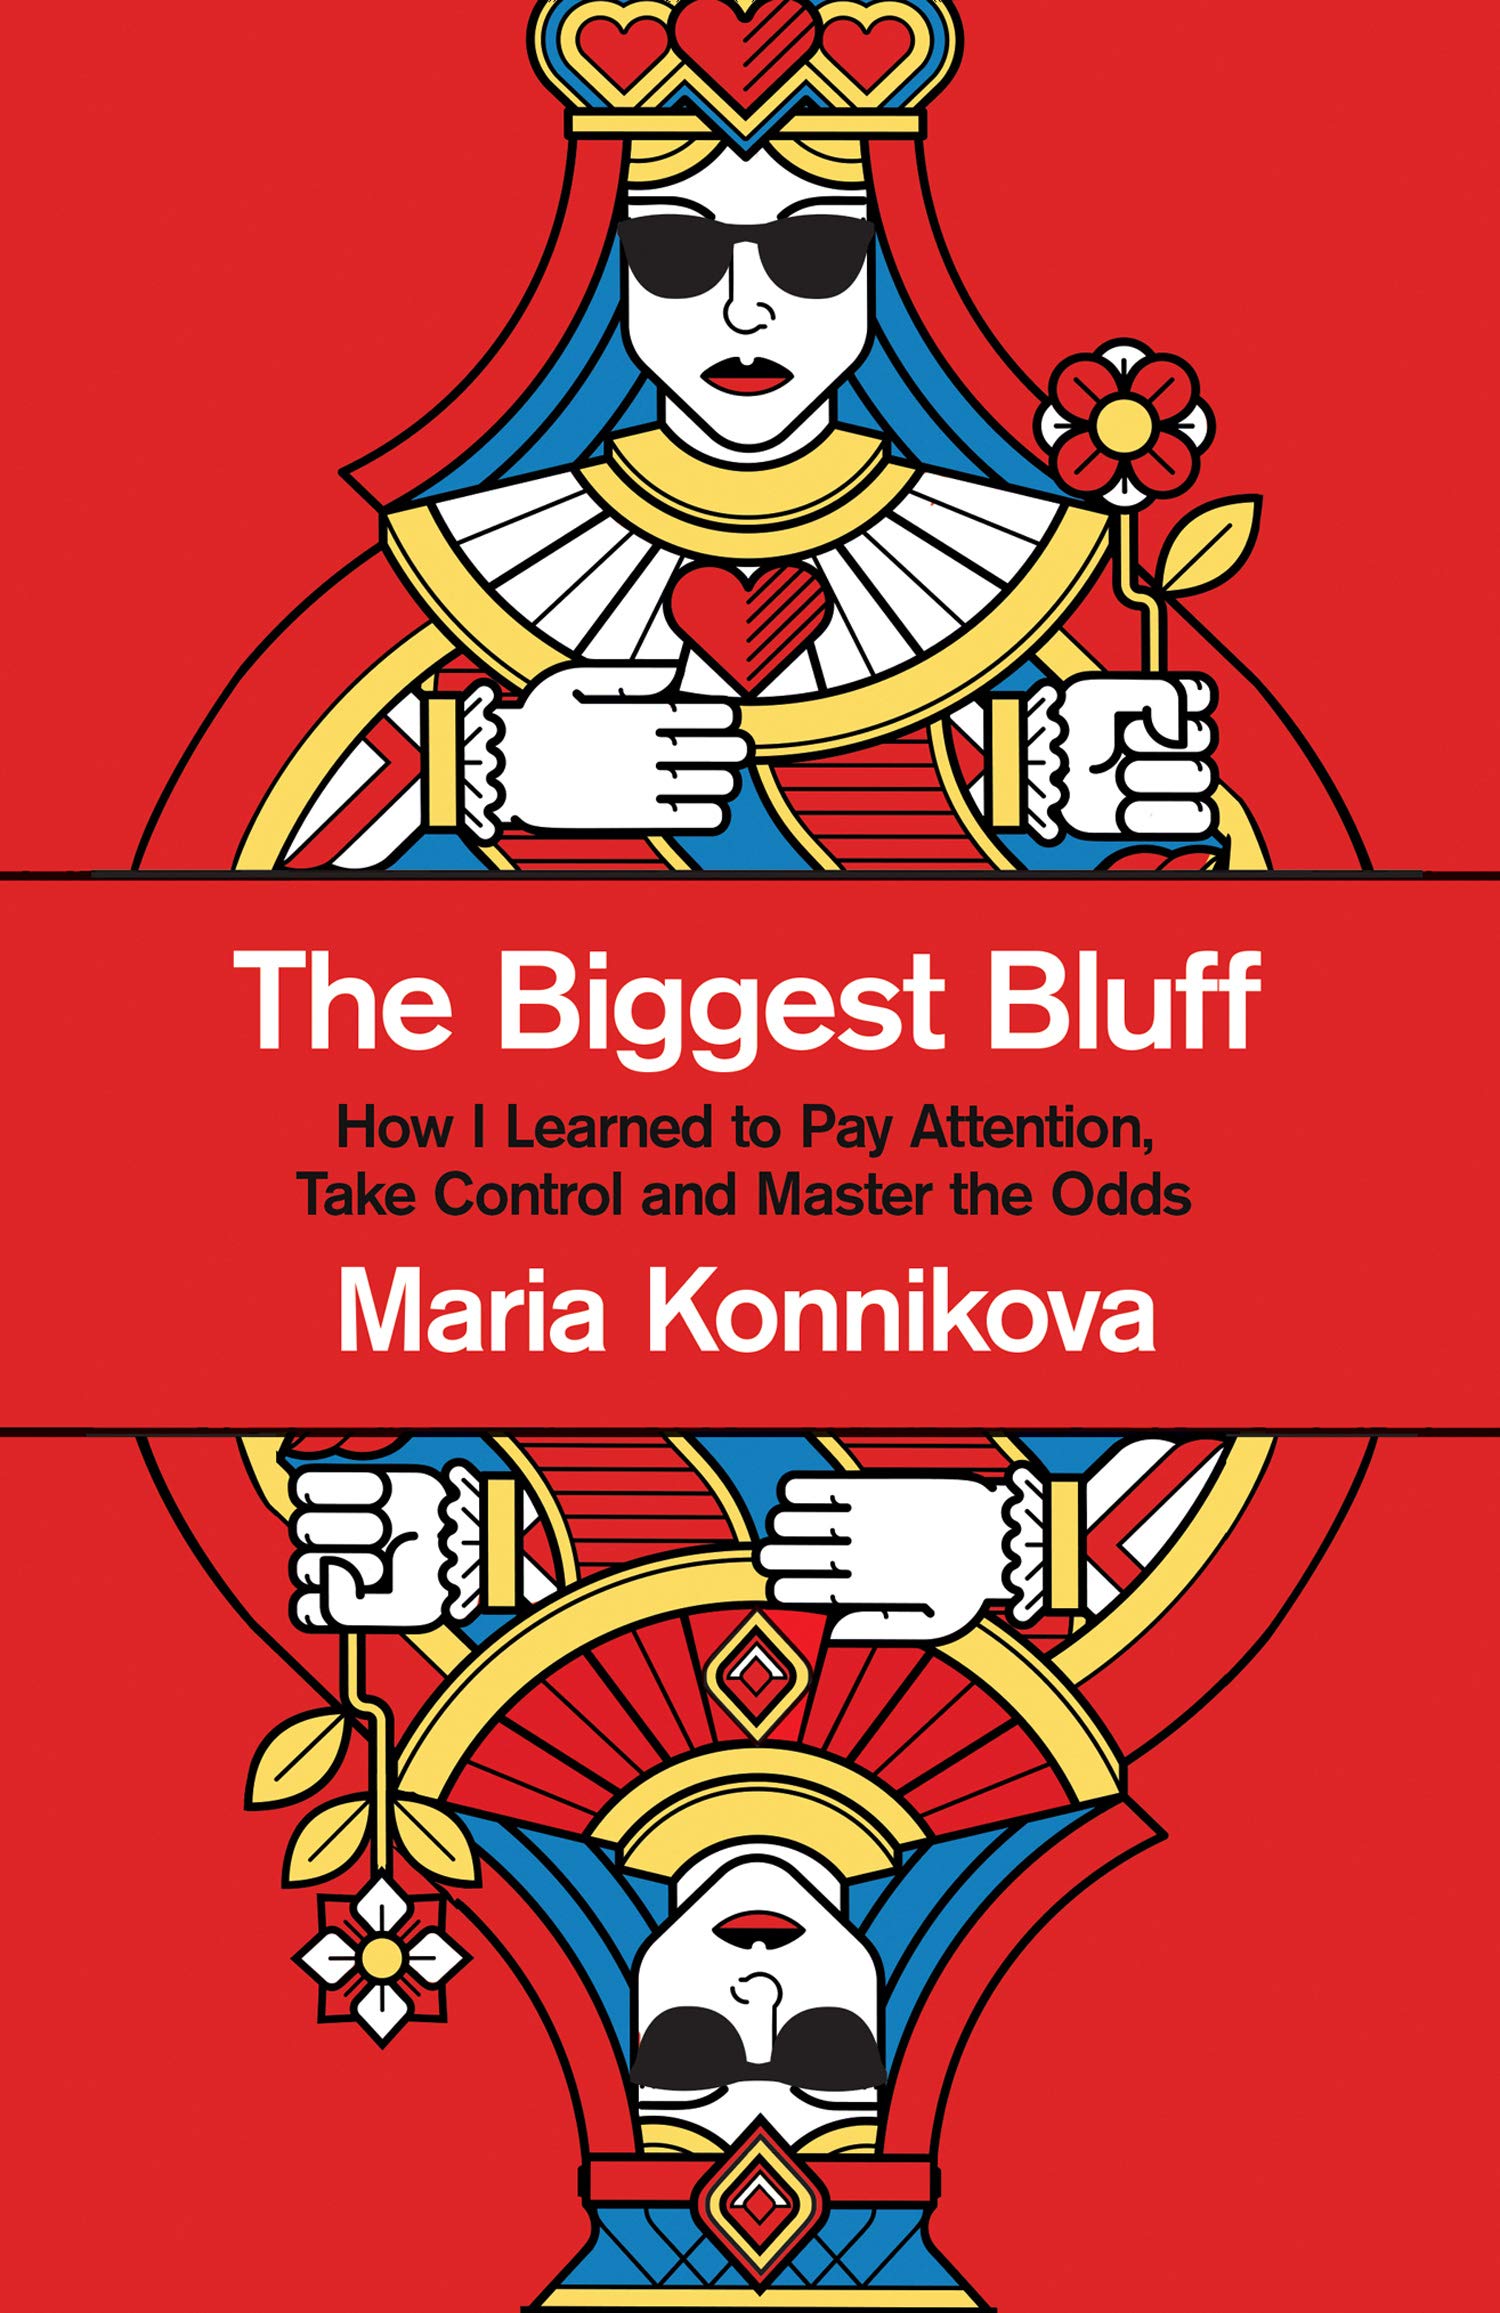 The Biggest Bluff - Author: Maria Konnikova